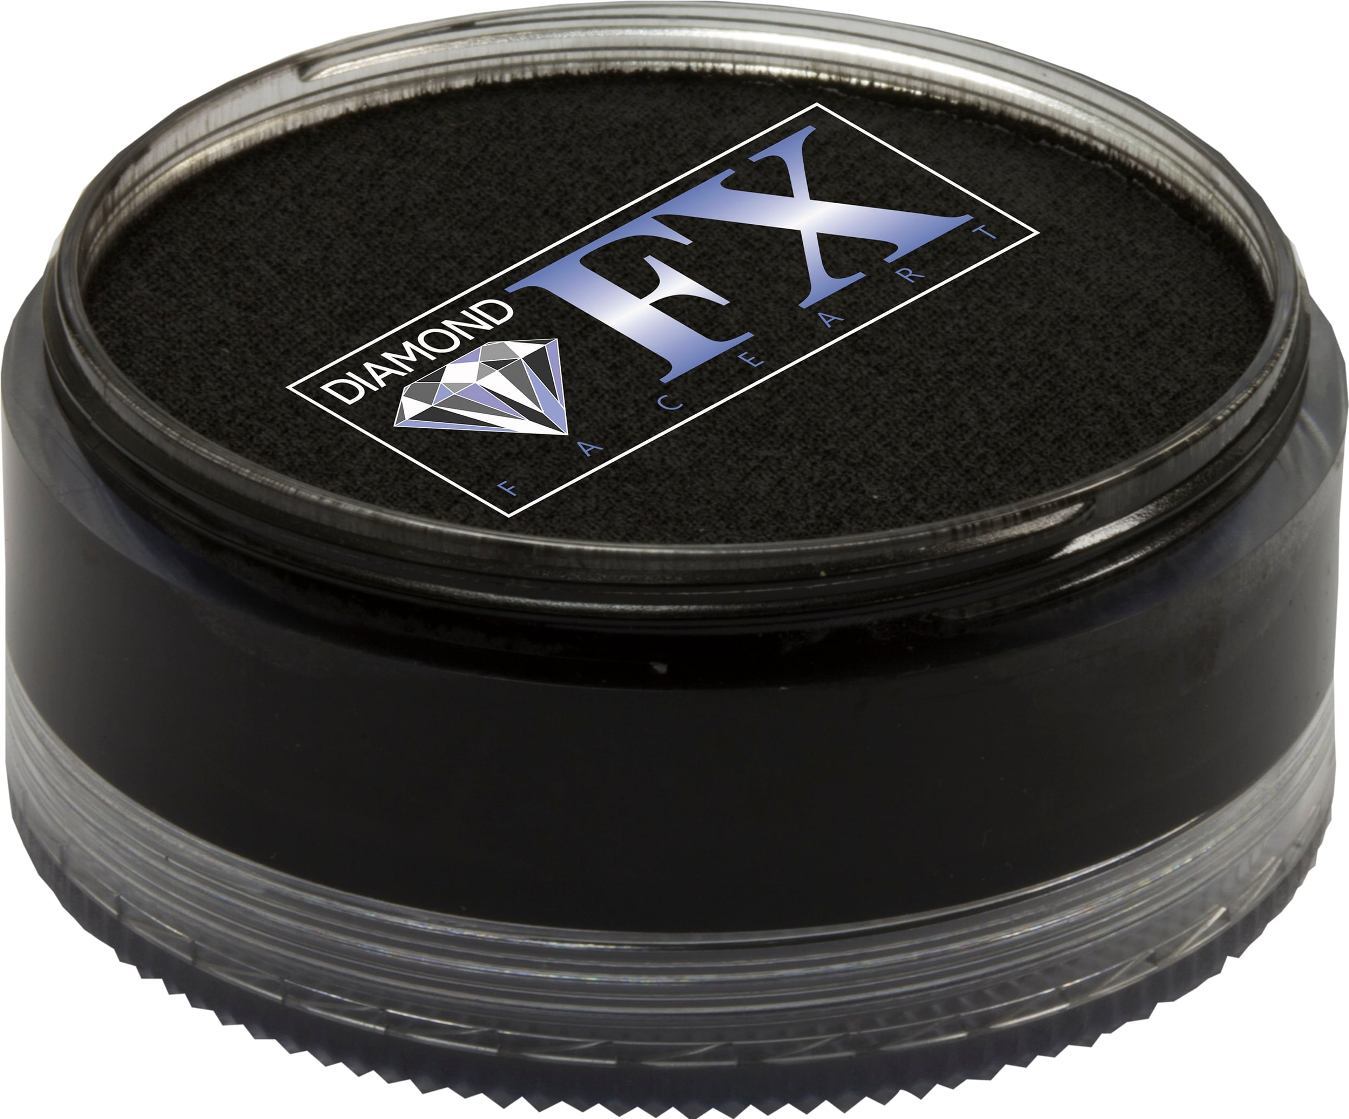 Diamond FX Black 90g - Small Image